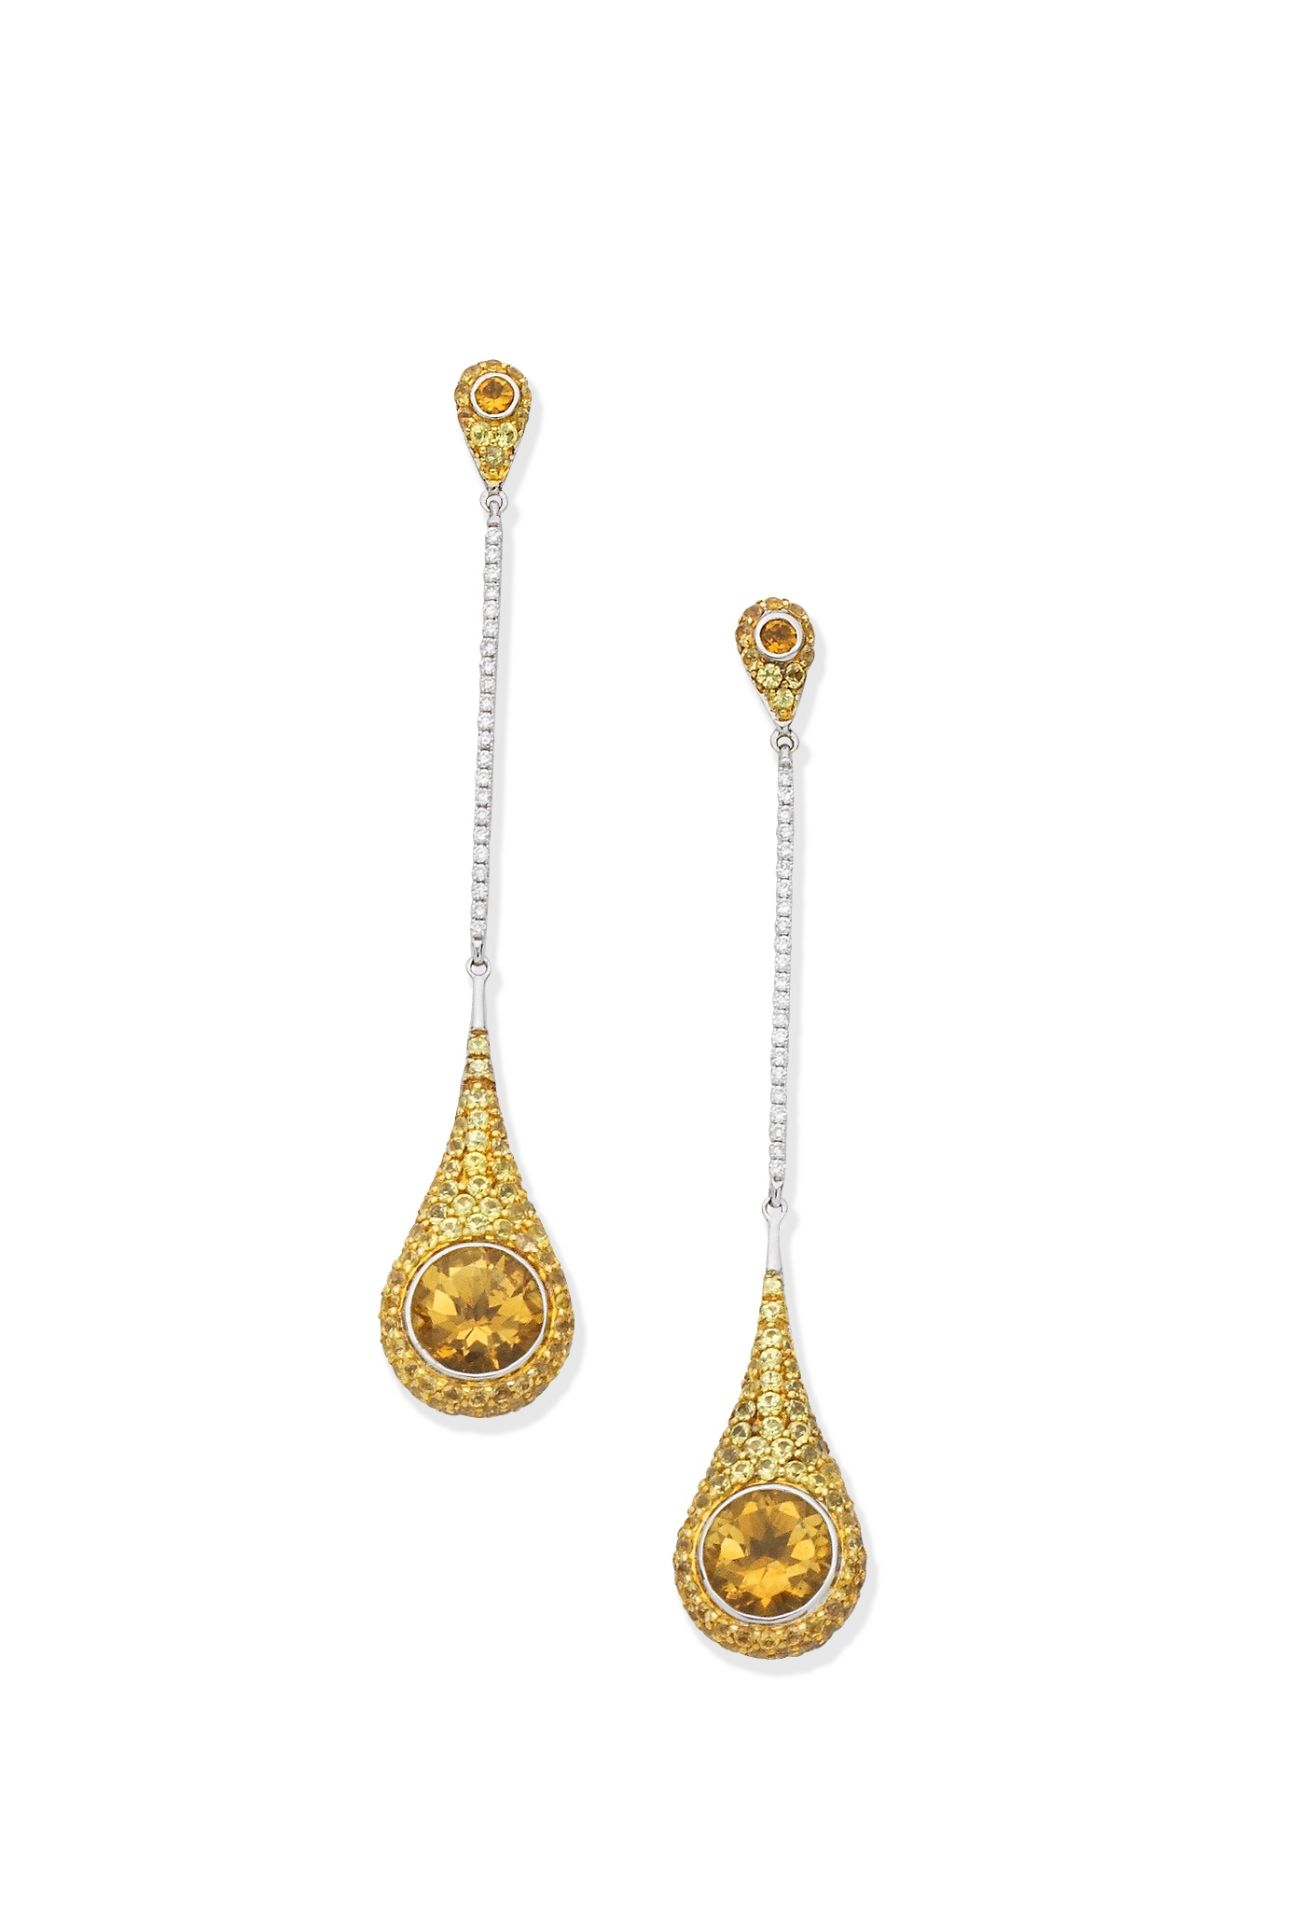 Citrine, sapphire and diamond pendent earrings